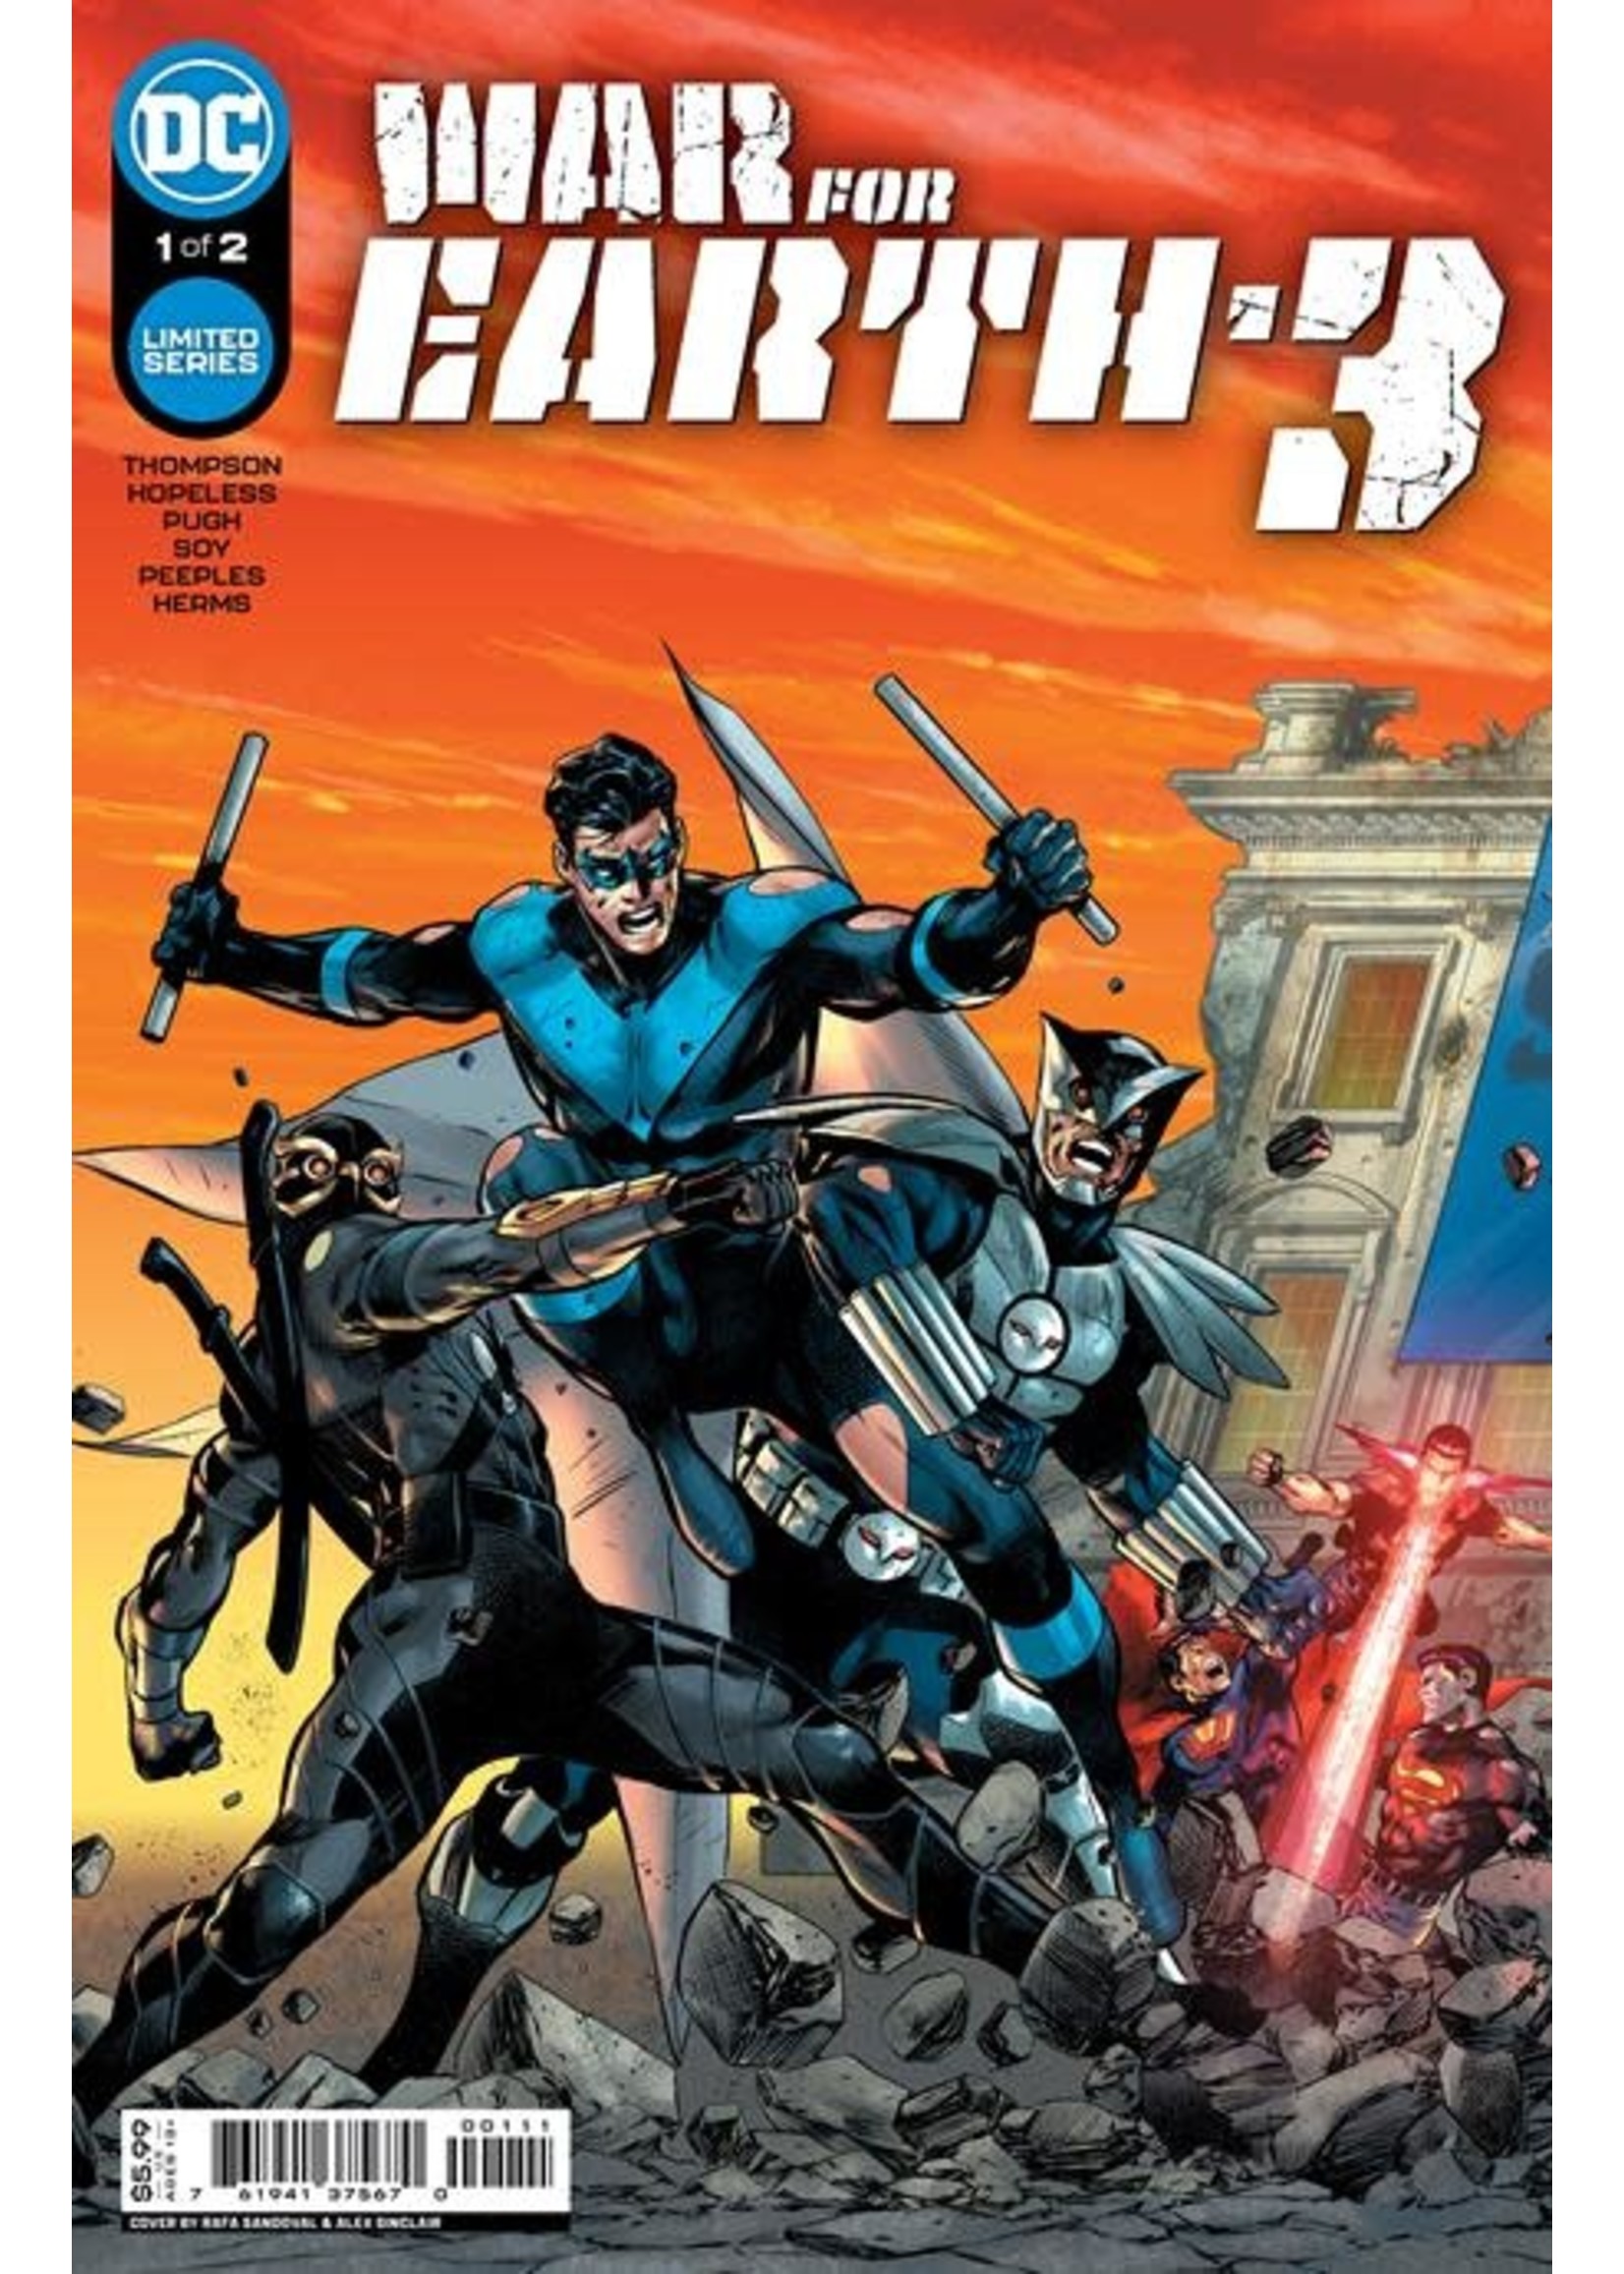 DC COMICS WAR FOR EARTH-3 #1 (OF 2) CVR A RAFA SANDOVAL